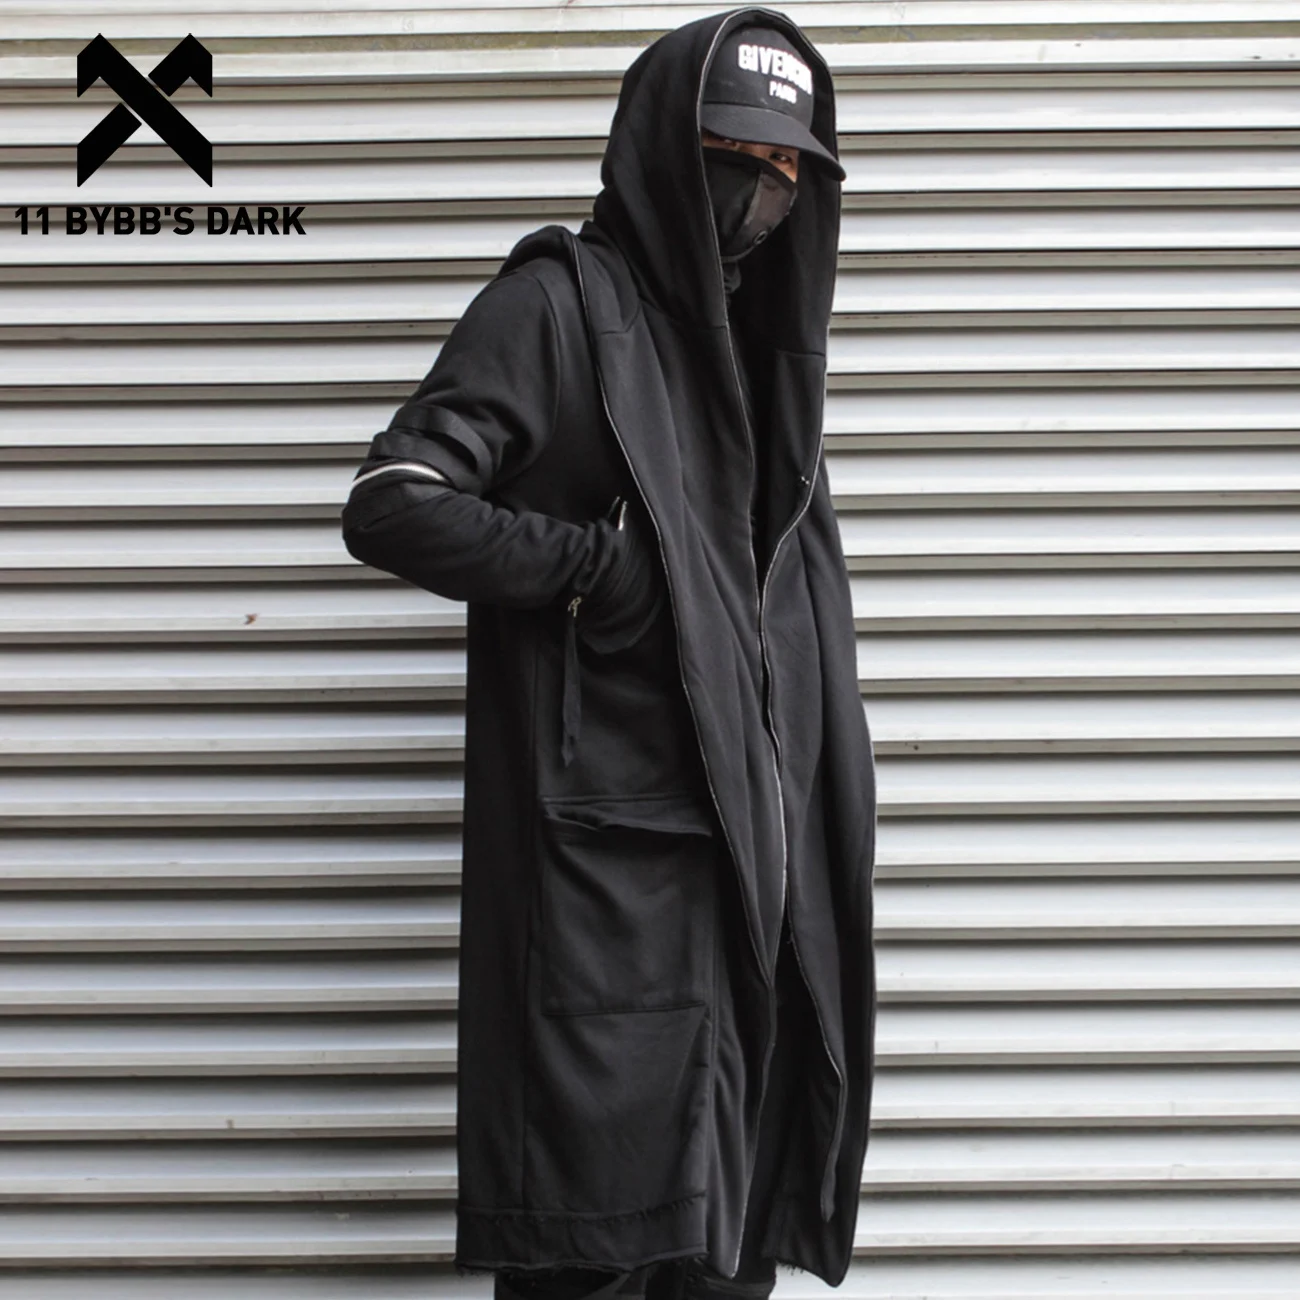 

11 BYBB'S DARK Wizard Cape Cloak Fake two Jacket Men Gothic Punk Streetwear Jacket Coats Tactical Function Hoody Windbreaker